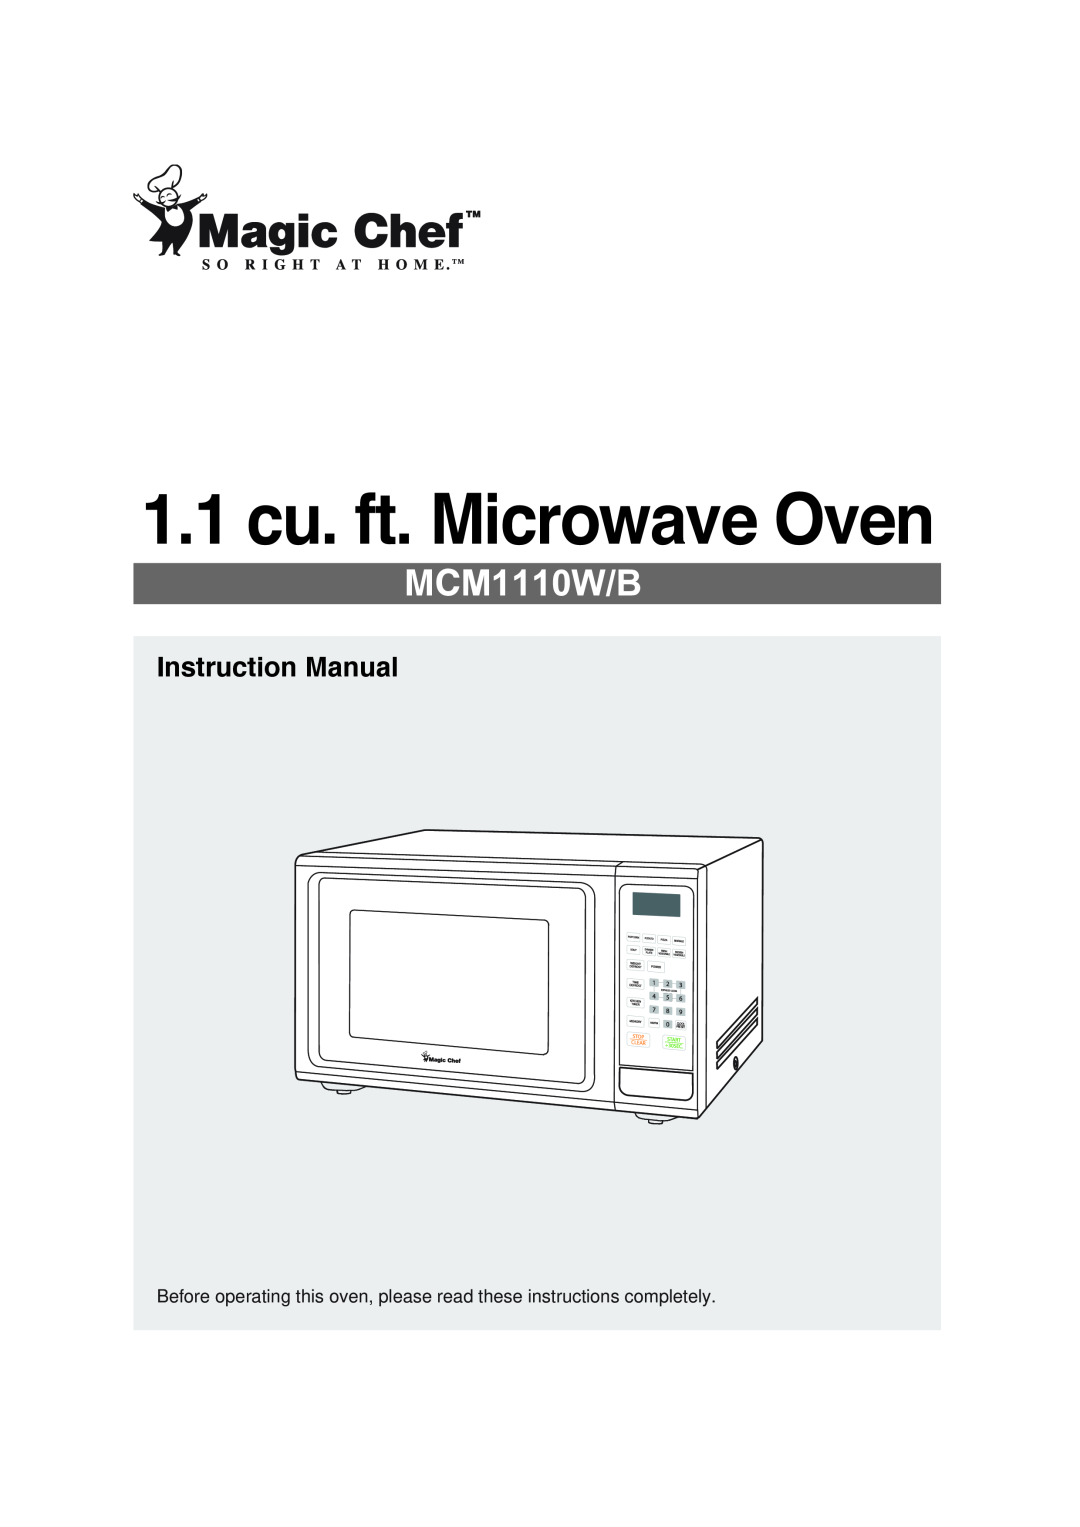 Magic Chef MCM1110W/B instruction manual 1.1 cu. ft. Microwave Oven 